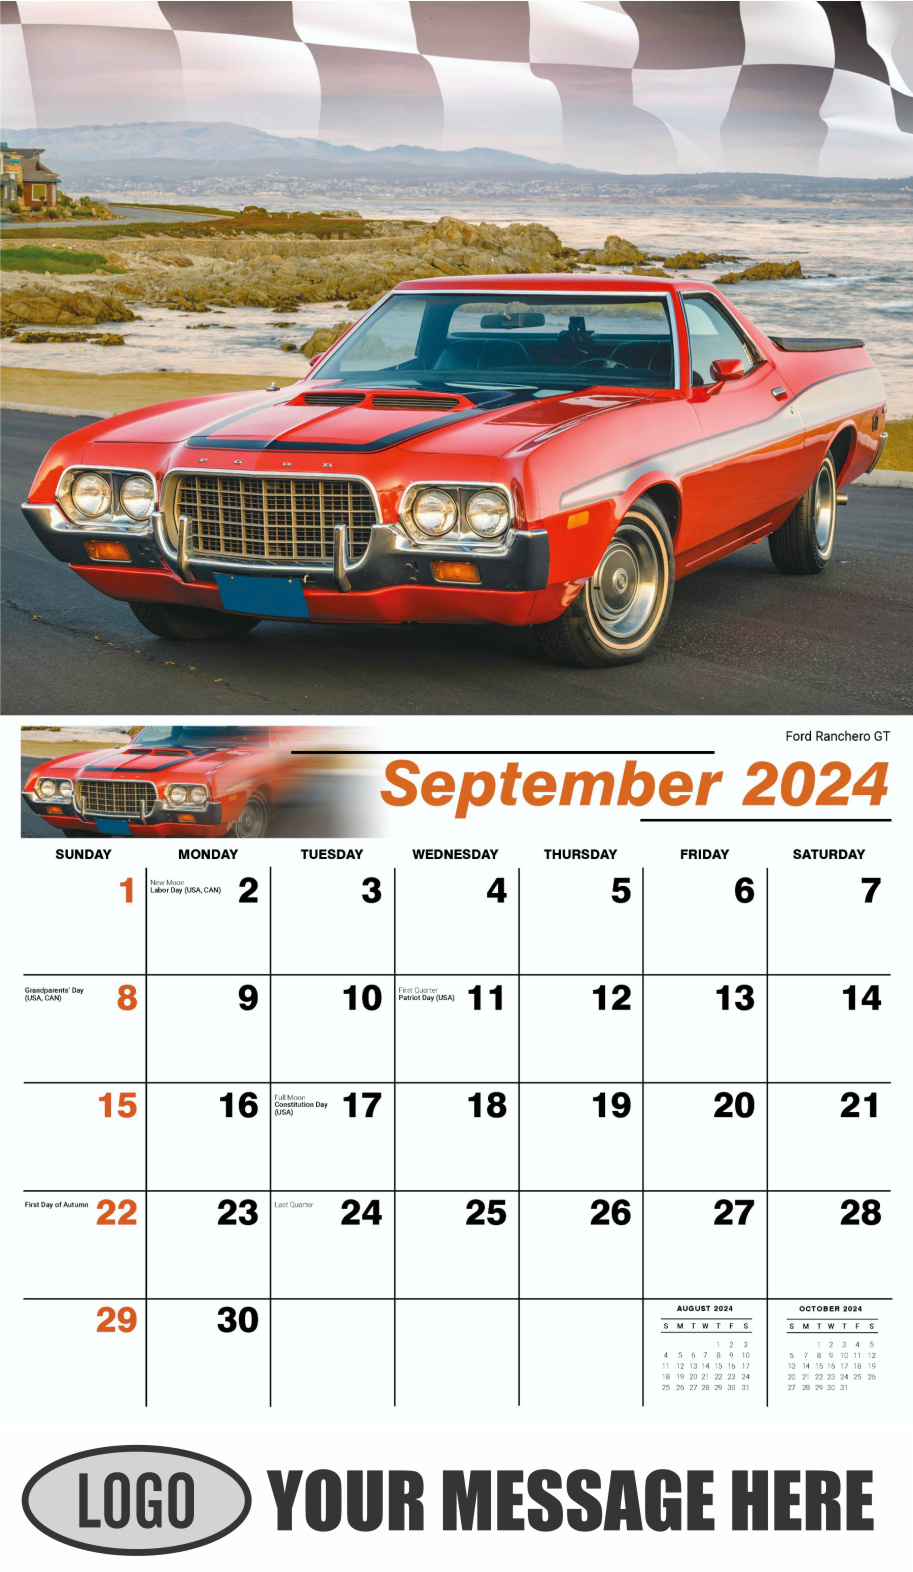 Road Warriors 2024 Automotive Business Promo Wall Calendar - September